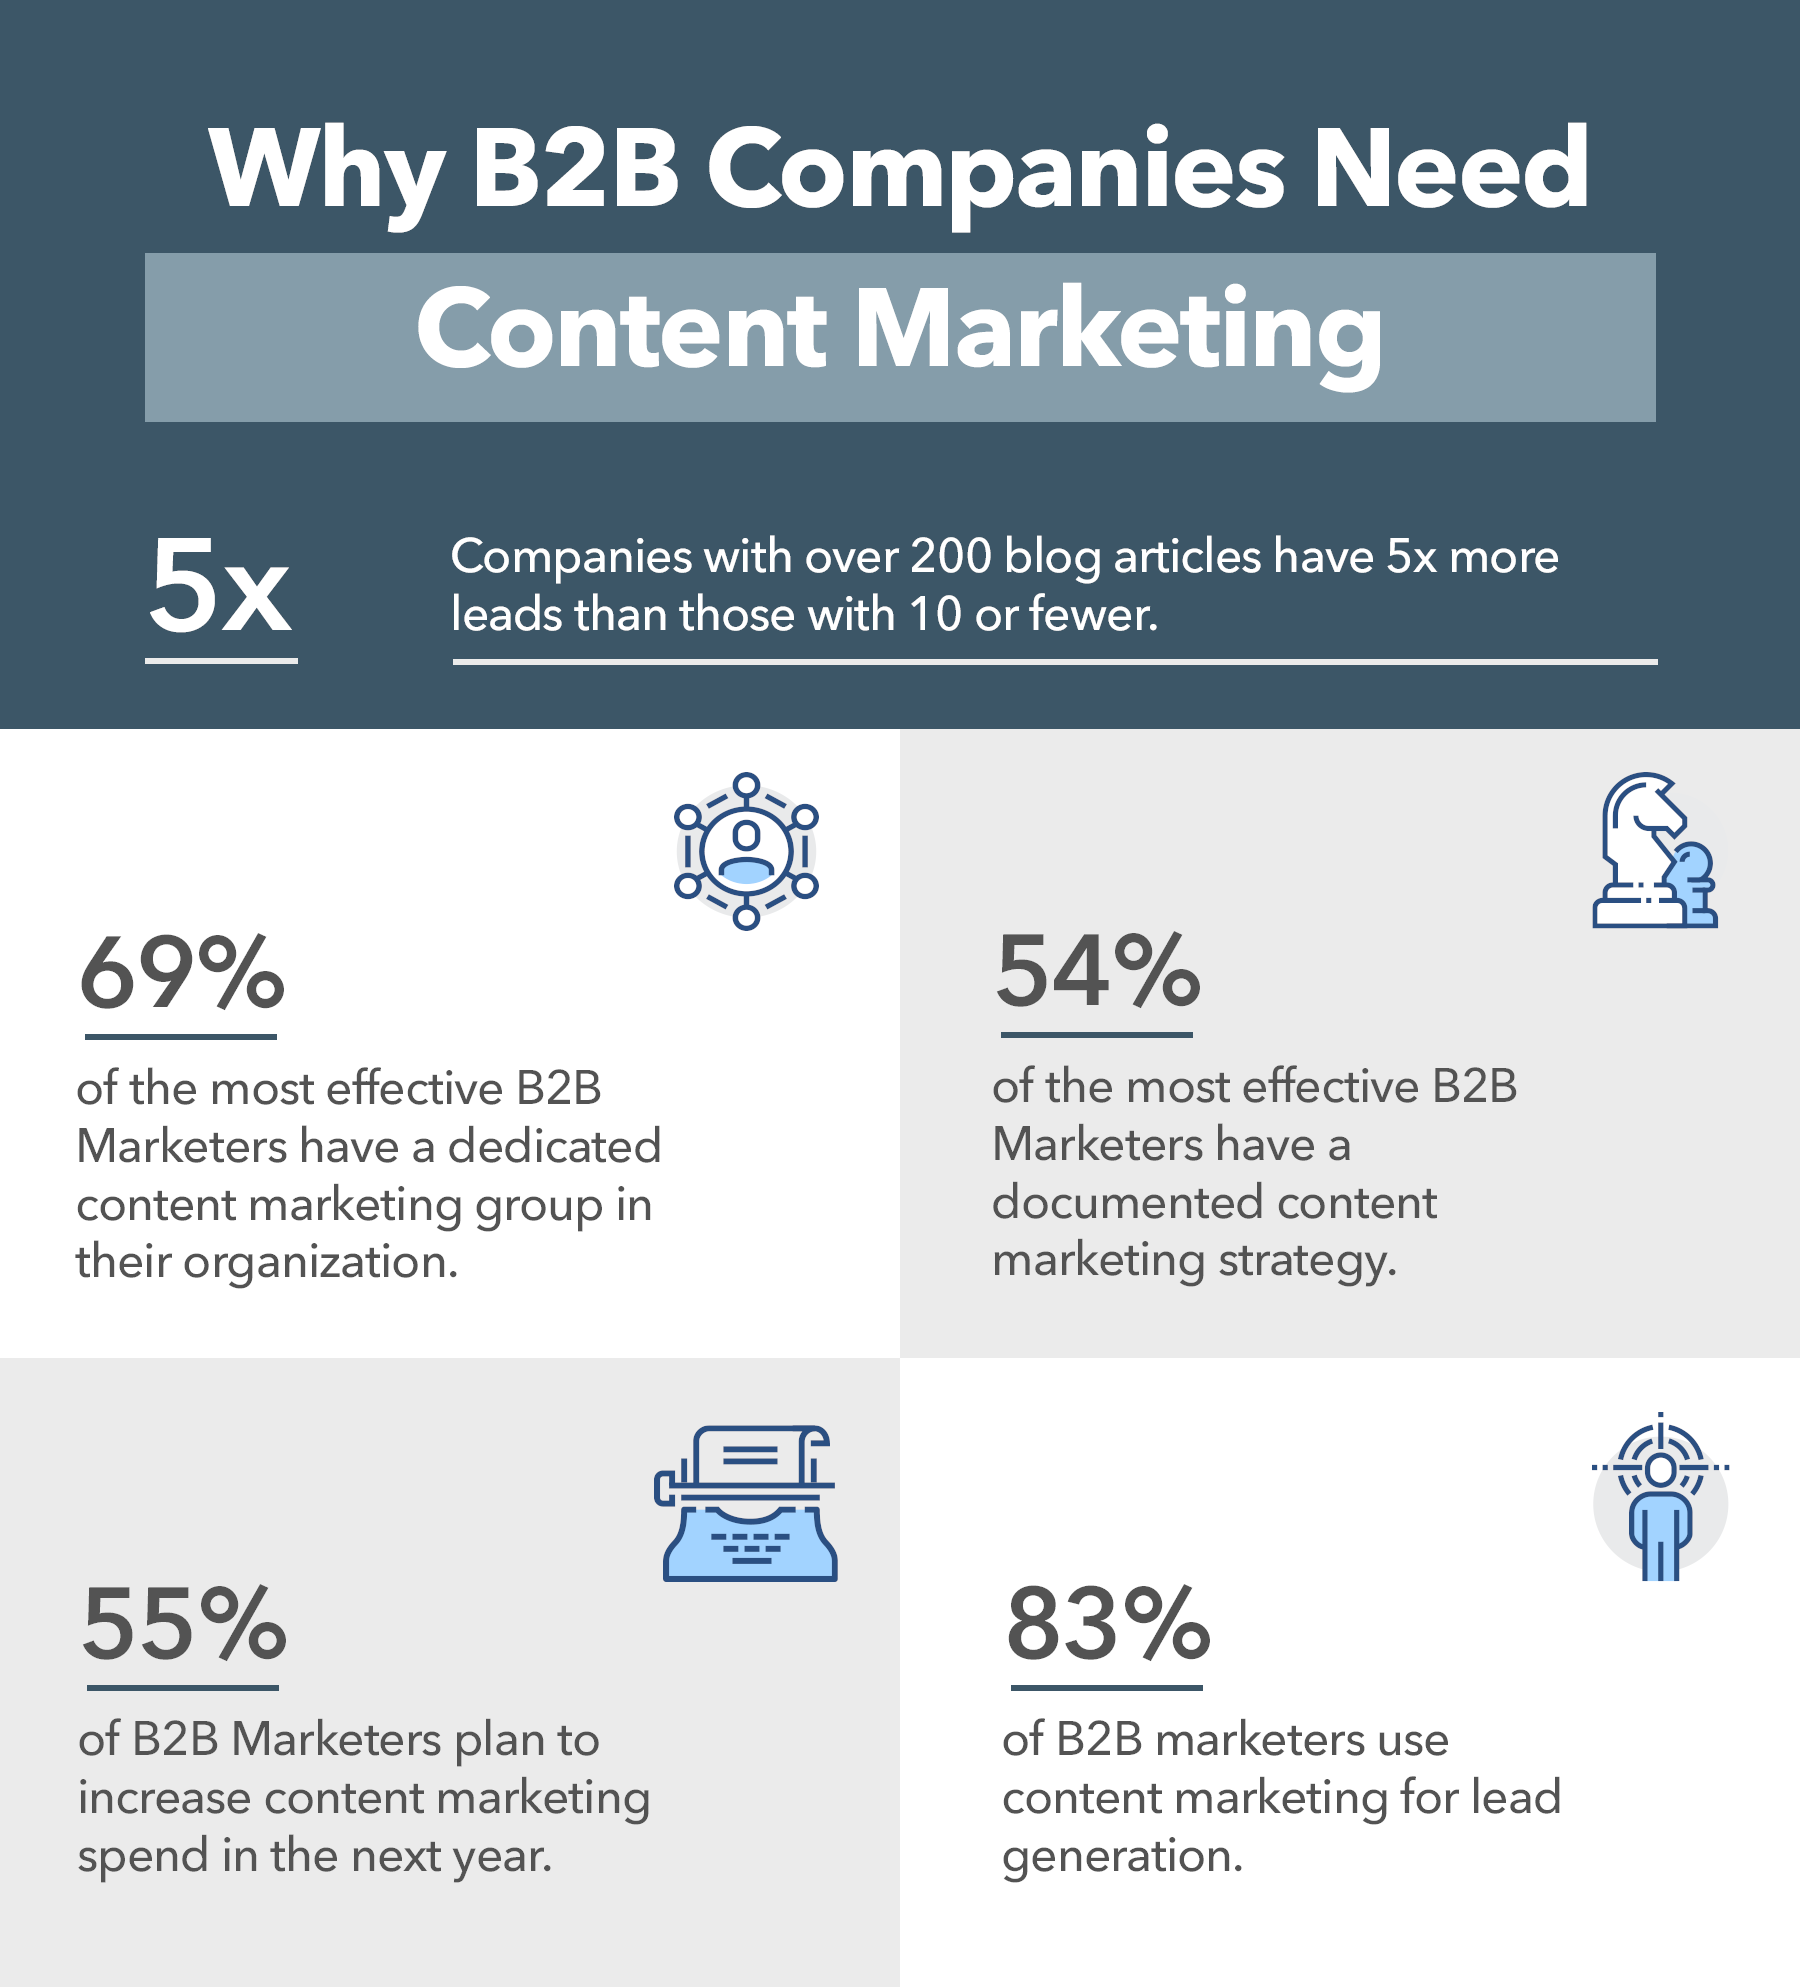 Why B2B companies need content marketing